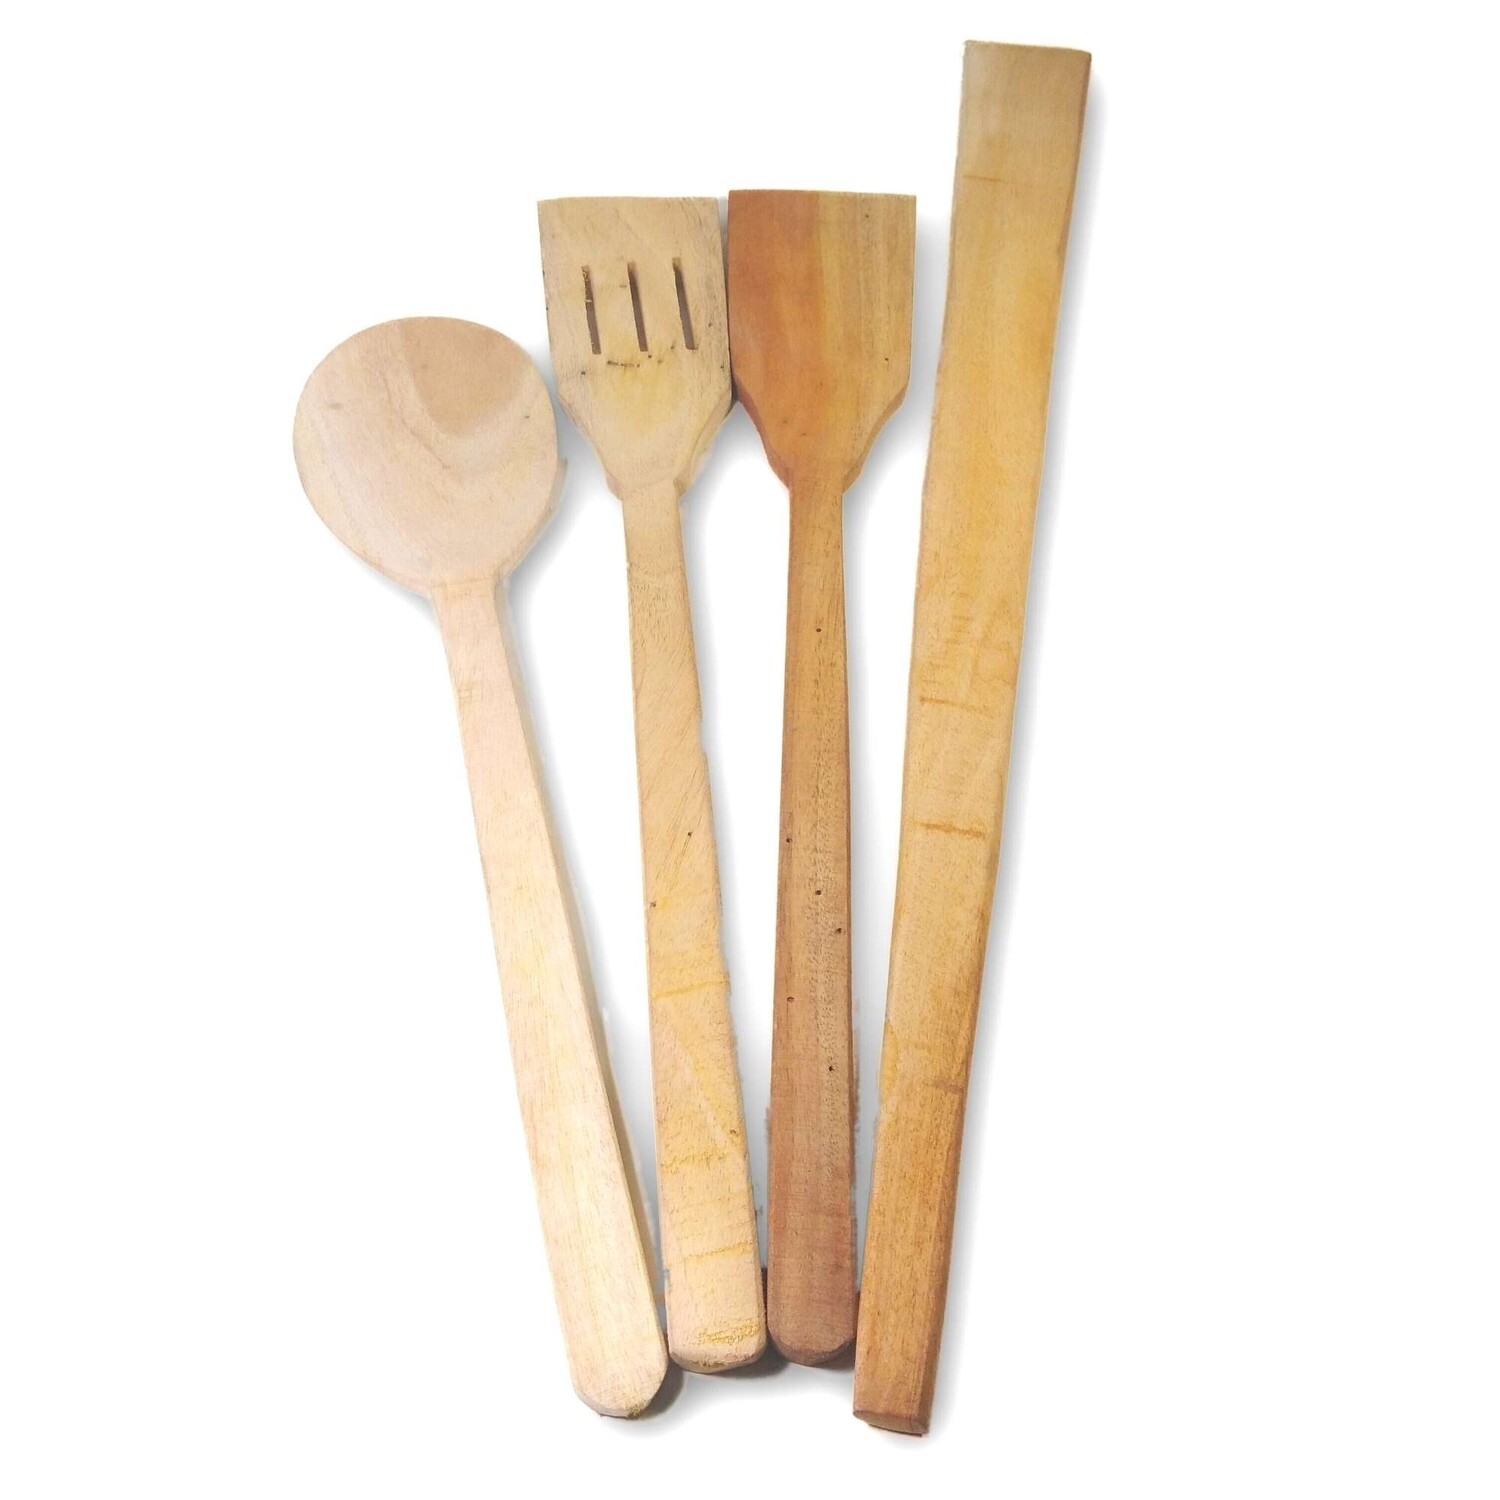 Wooden Kitchen tools - 4 Pieces